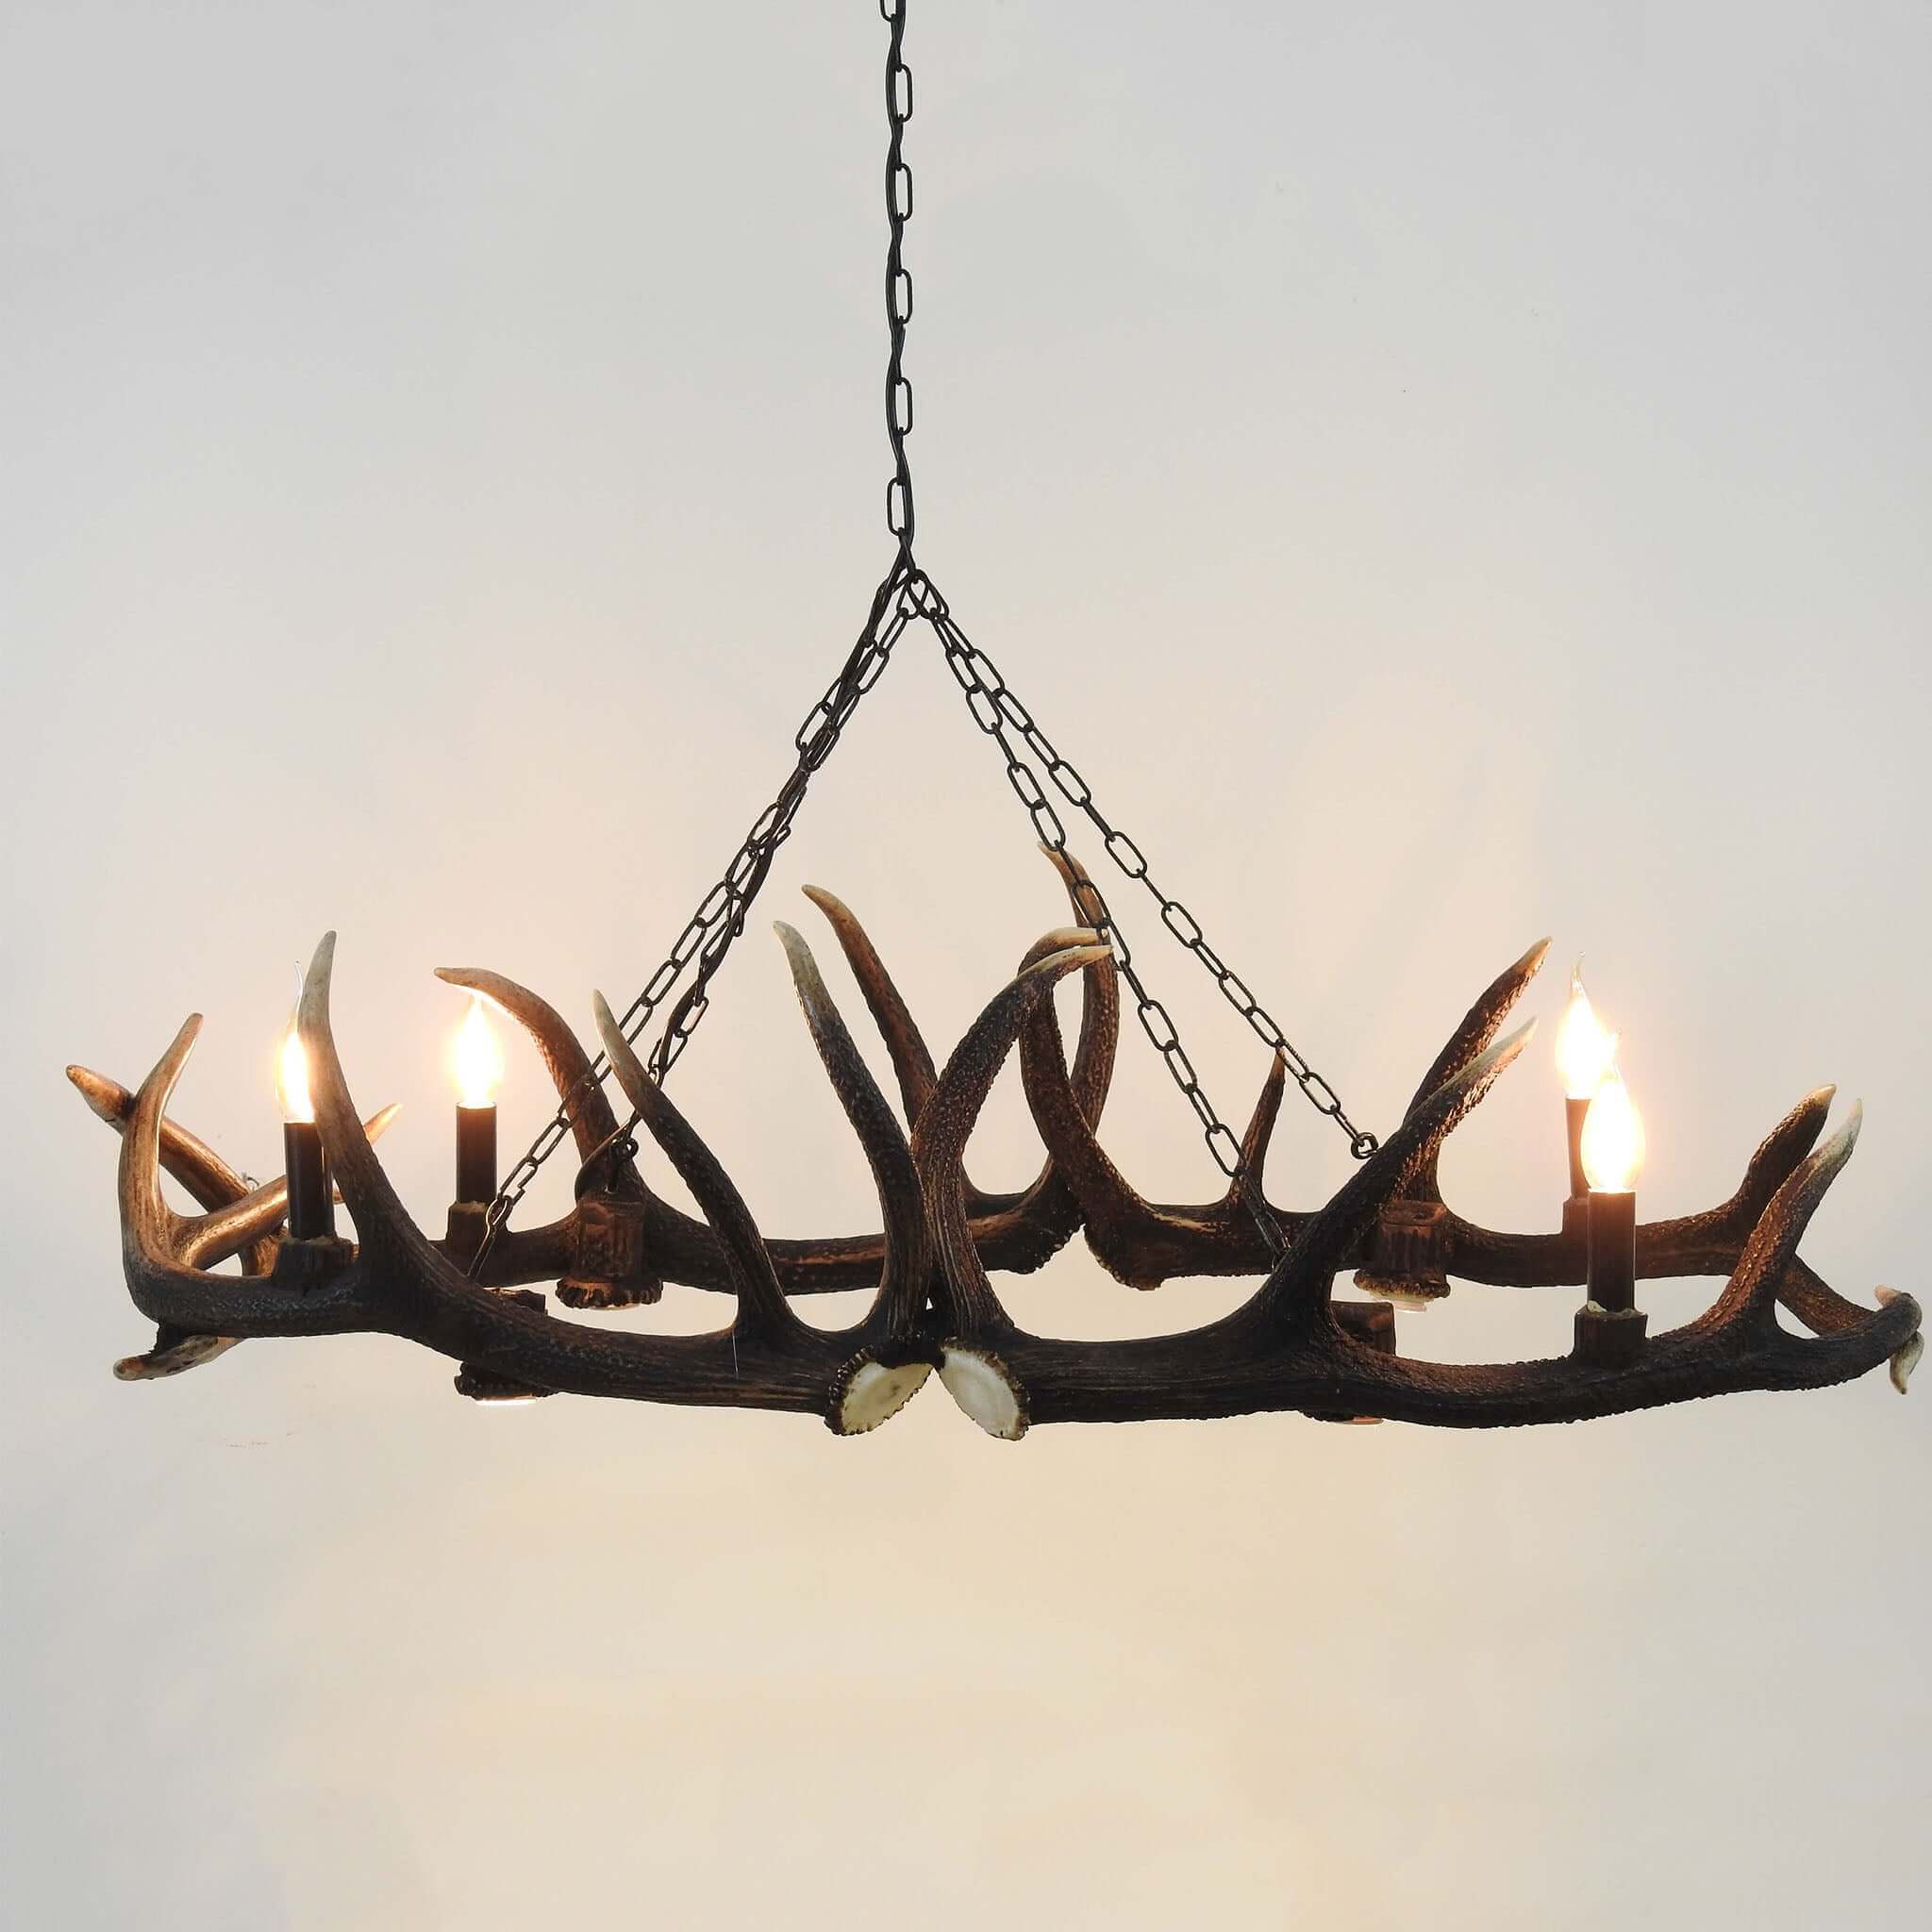 Real deer antler chandelier